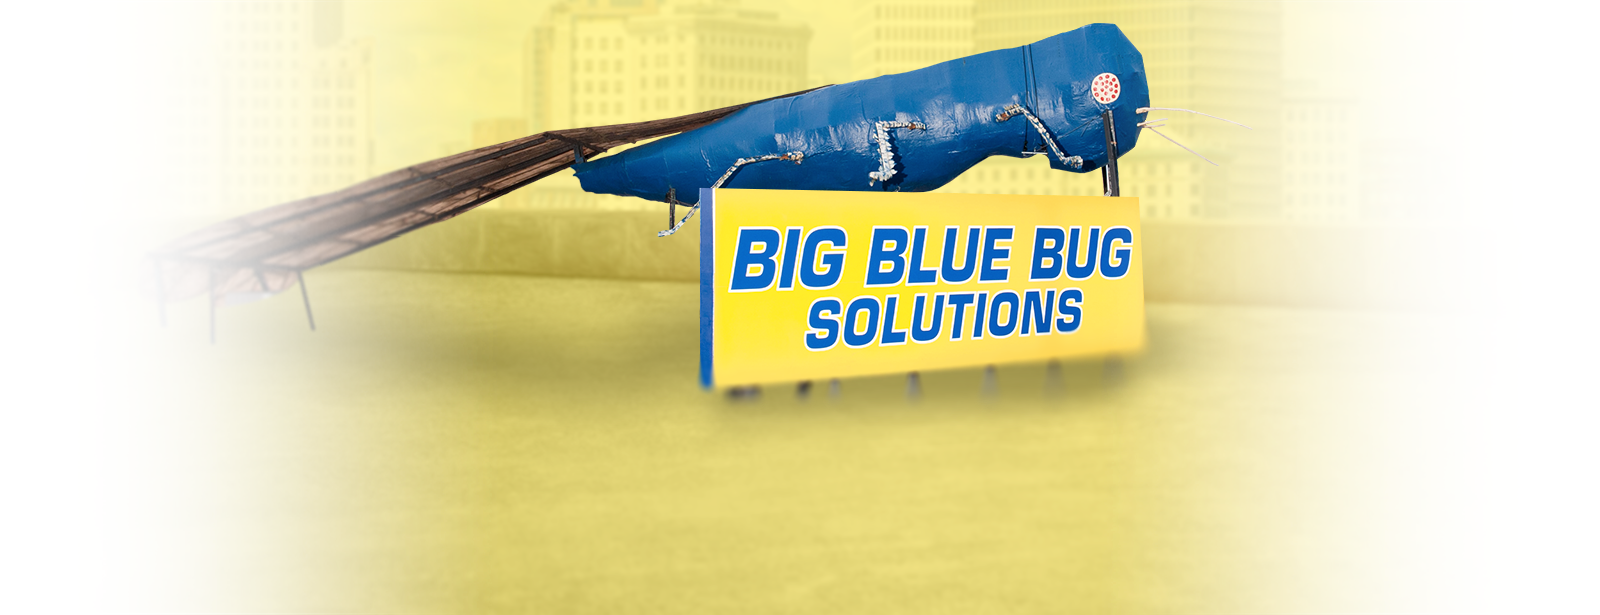 the big blue bug mascot in providence rhode island